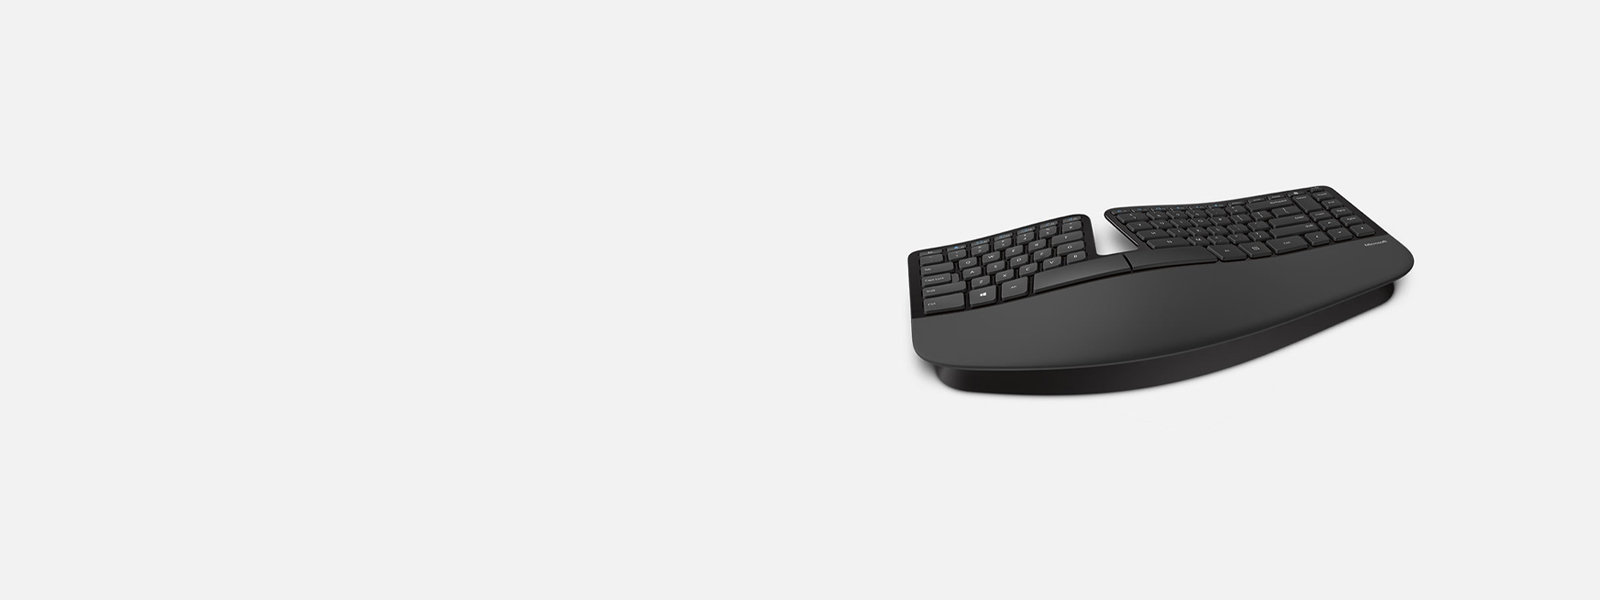 Sculpt Ergonomic Keyboard for Accessories Business Business | Microsoft